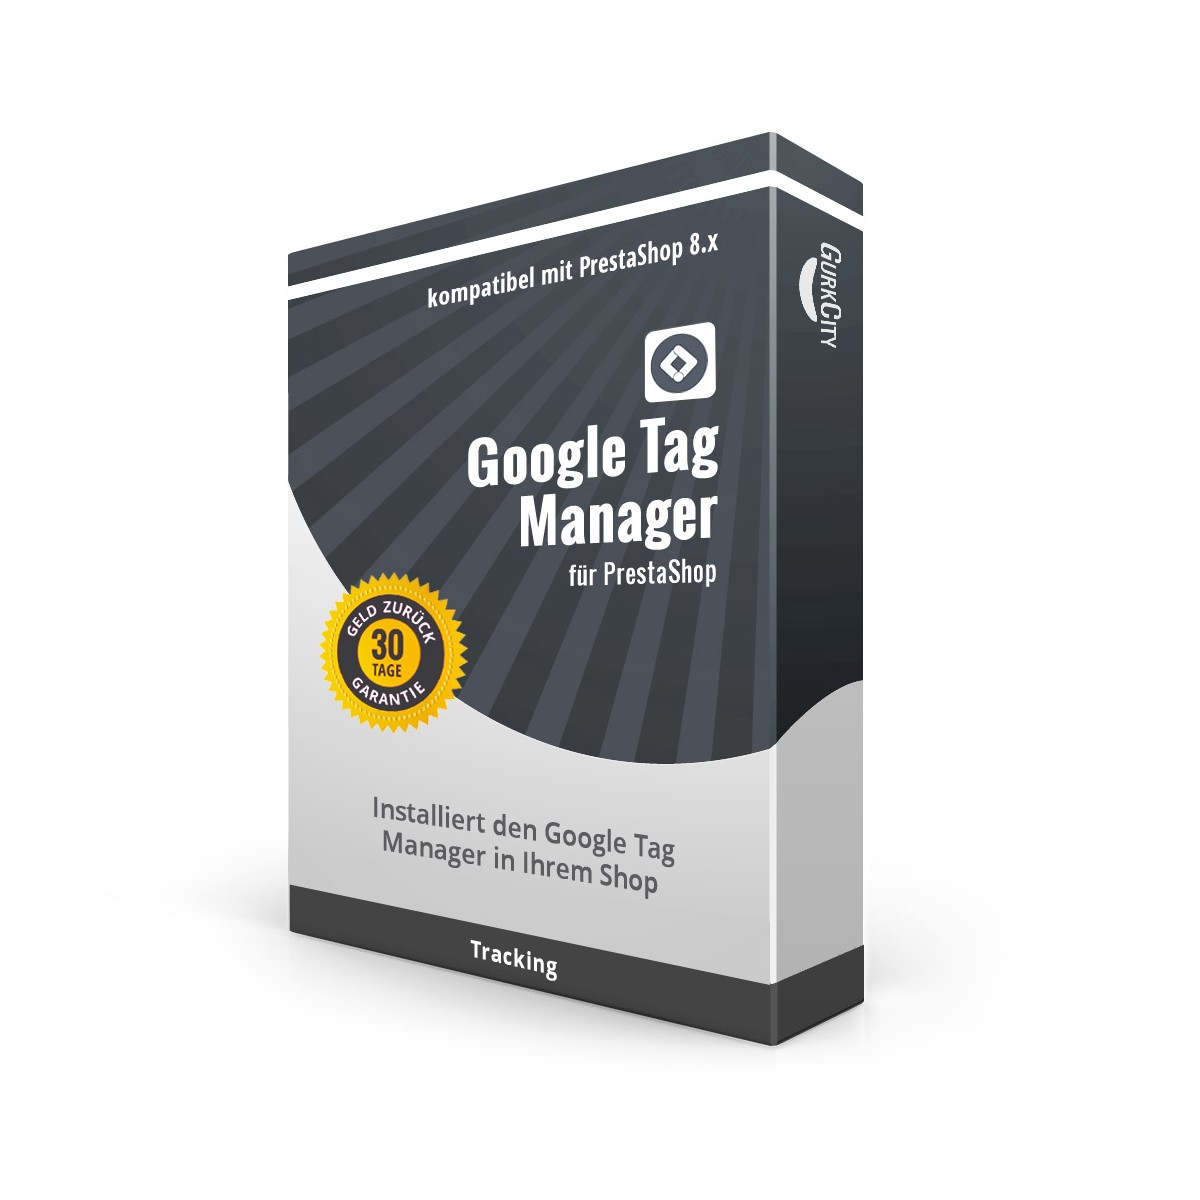 Google Tag Manager PrestaShop 8.x